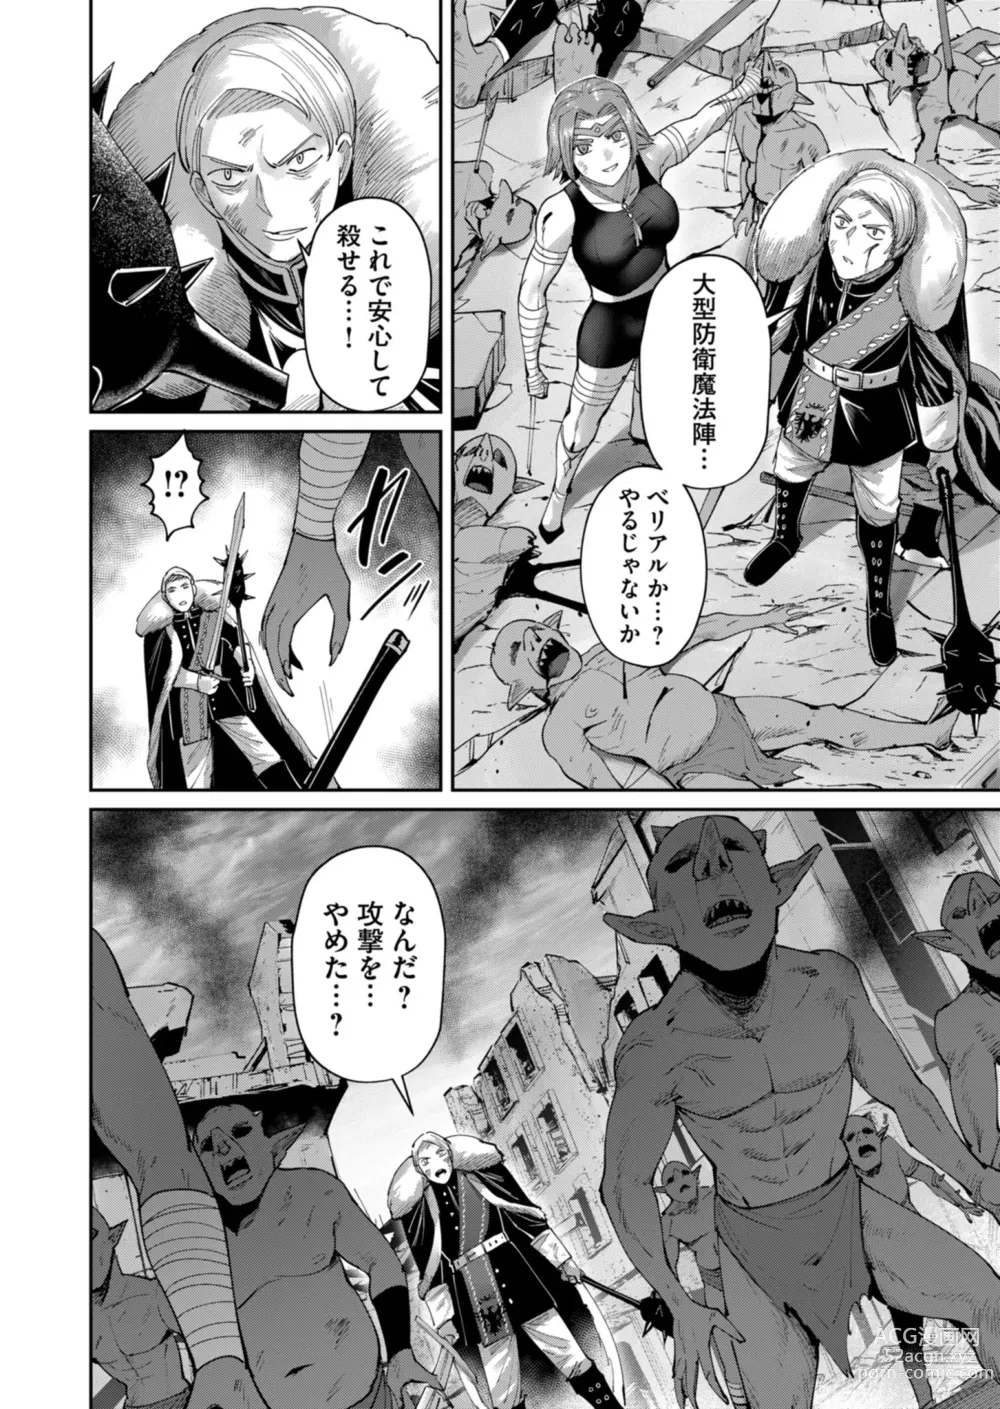 Page 166 of manga Kichiku Eiyuu Vol.06